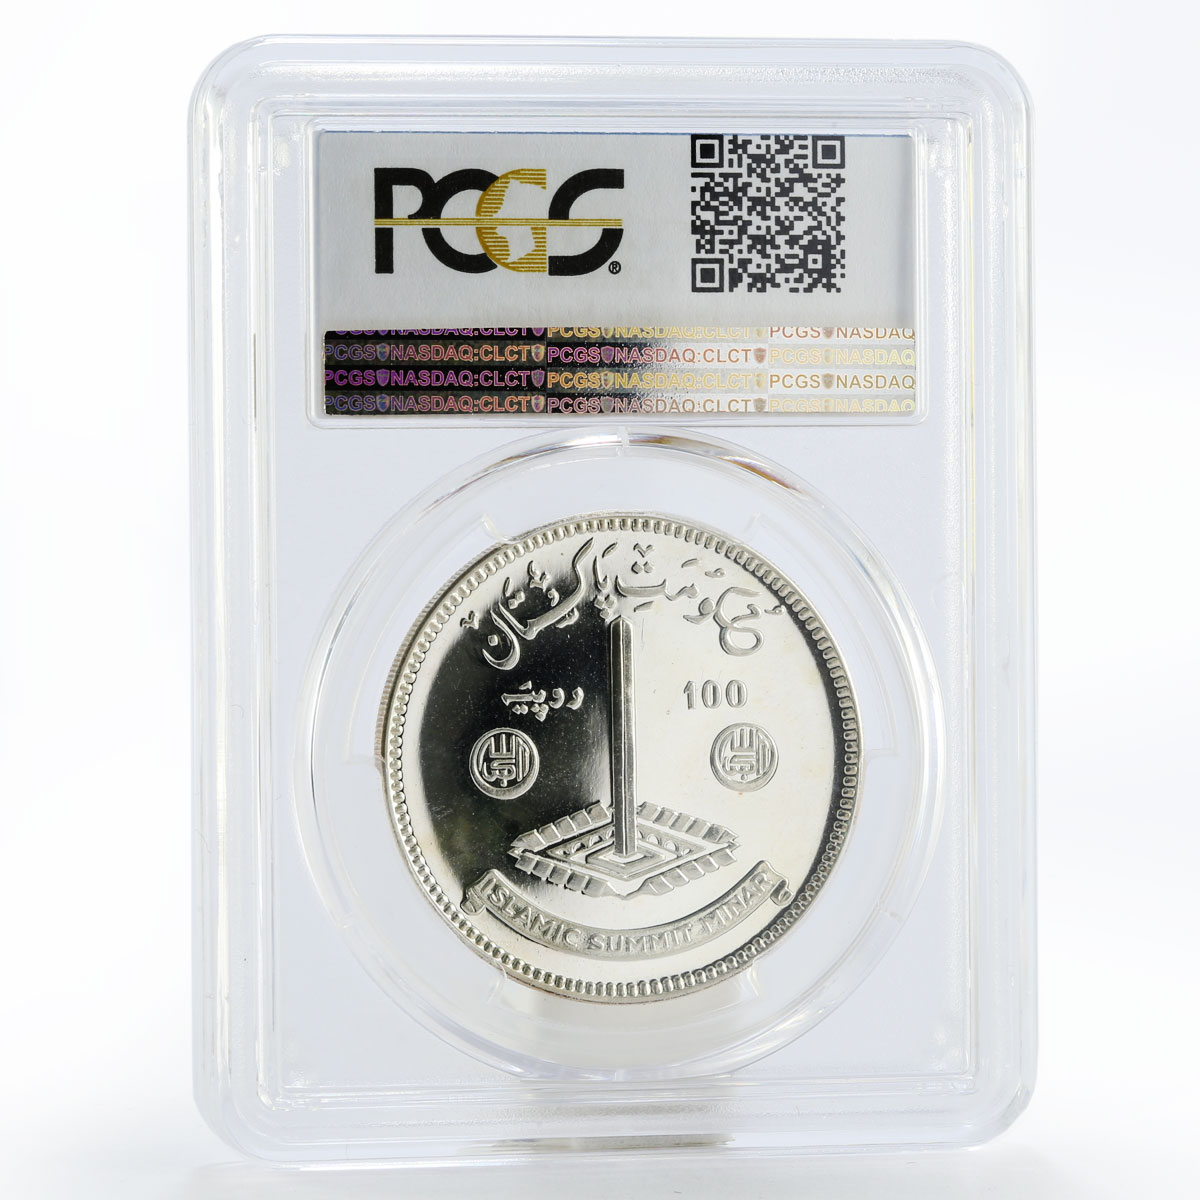 Pakistan 100 rupees Islamic Summit Minar PCGS MS65 silver coin 1977